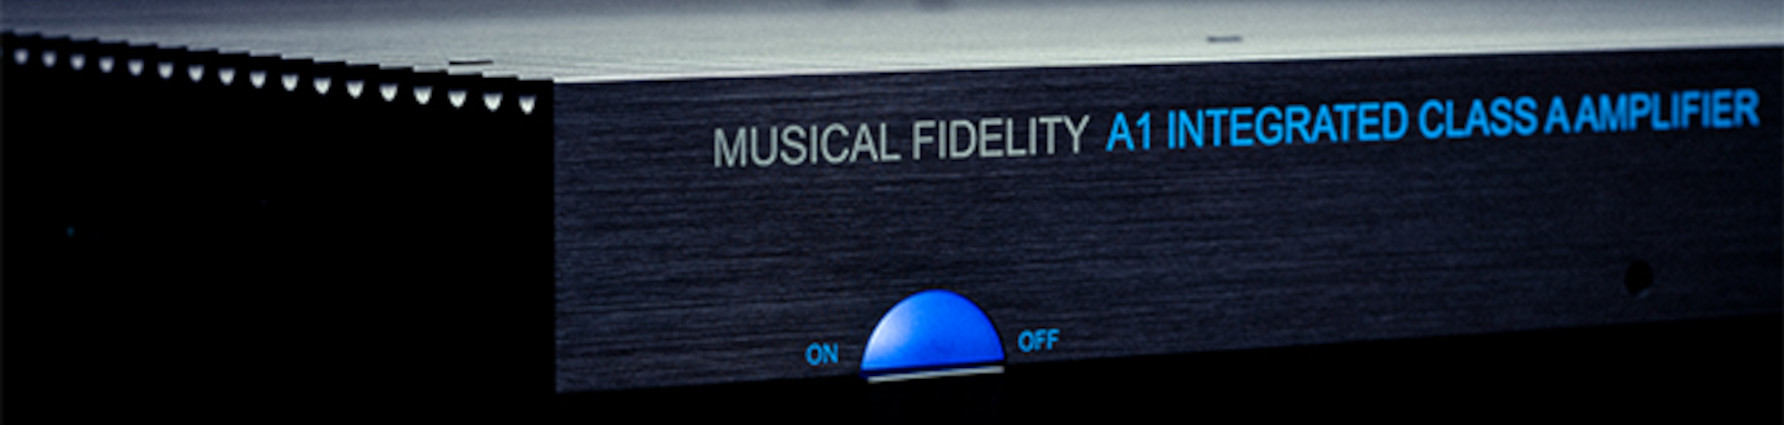 musical-fidelity_bielefeldjpg